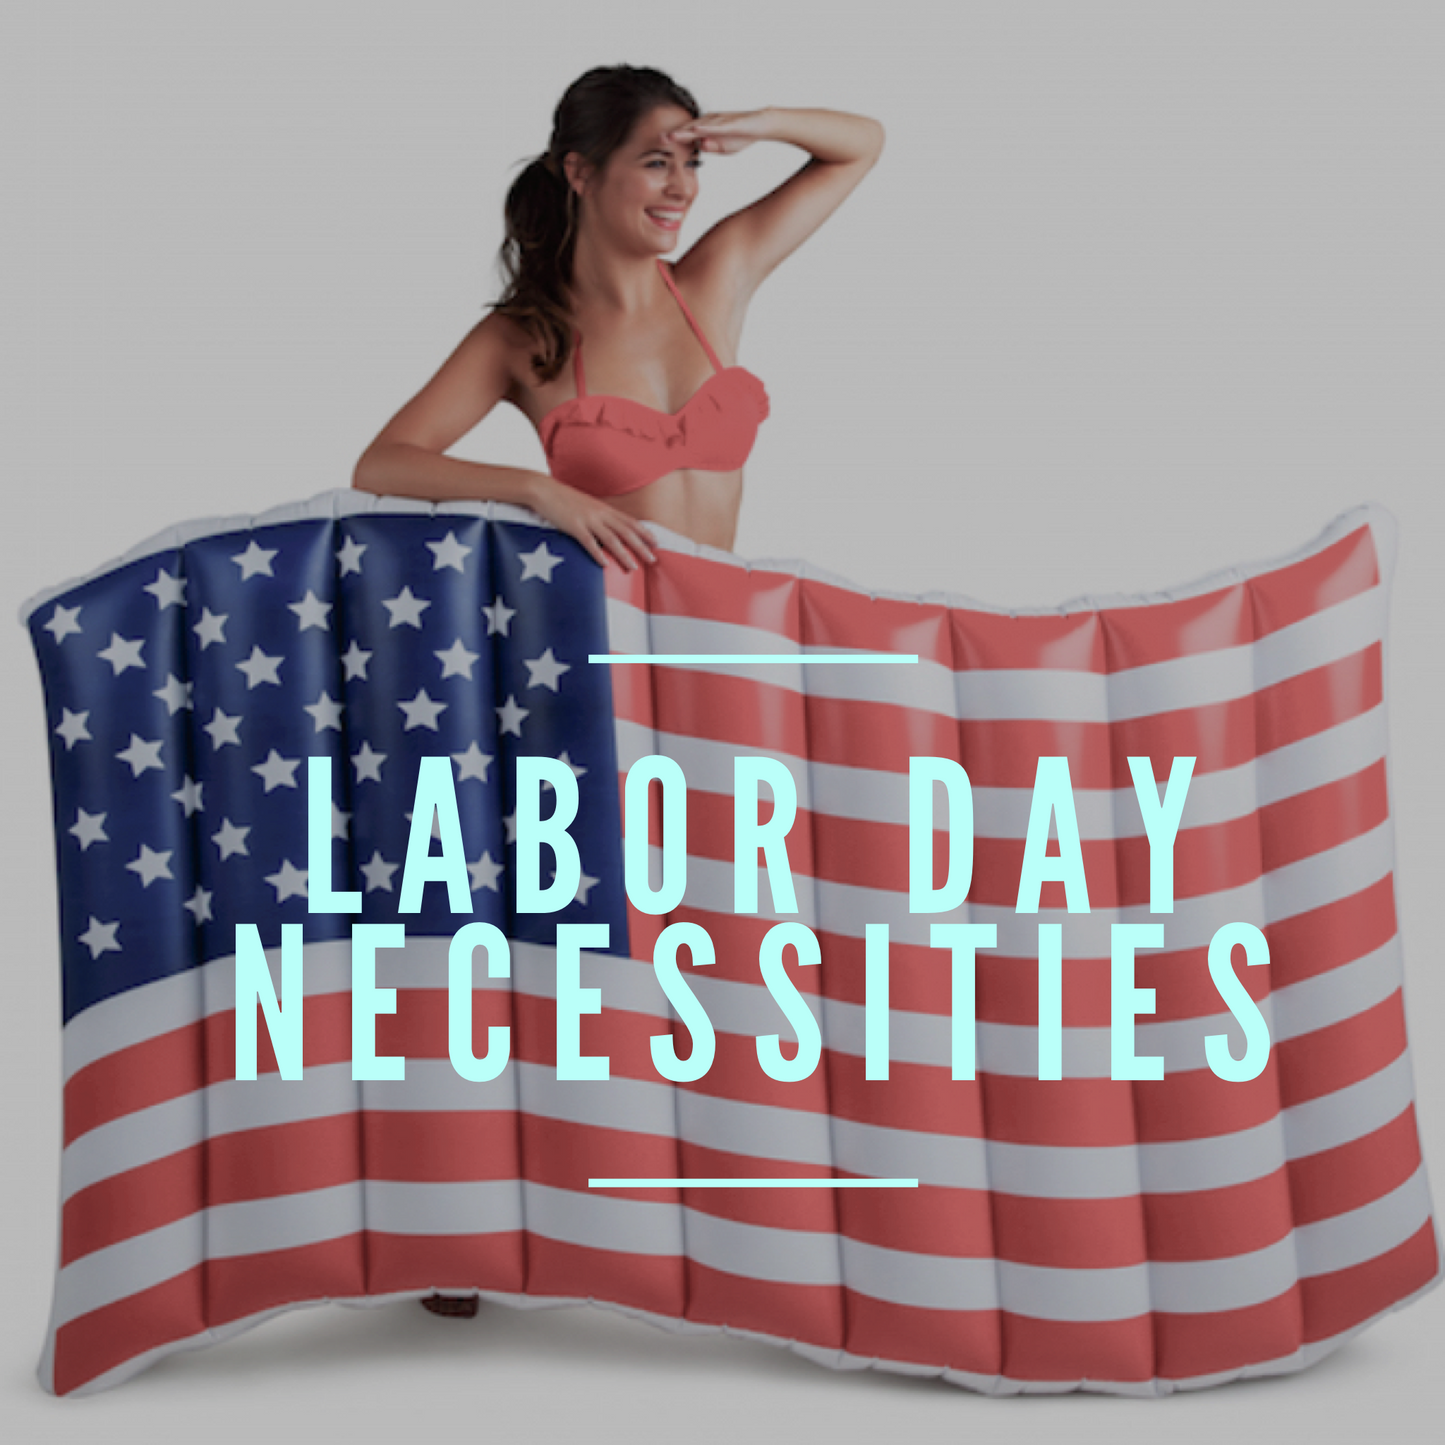 Labor Day Necessities